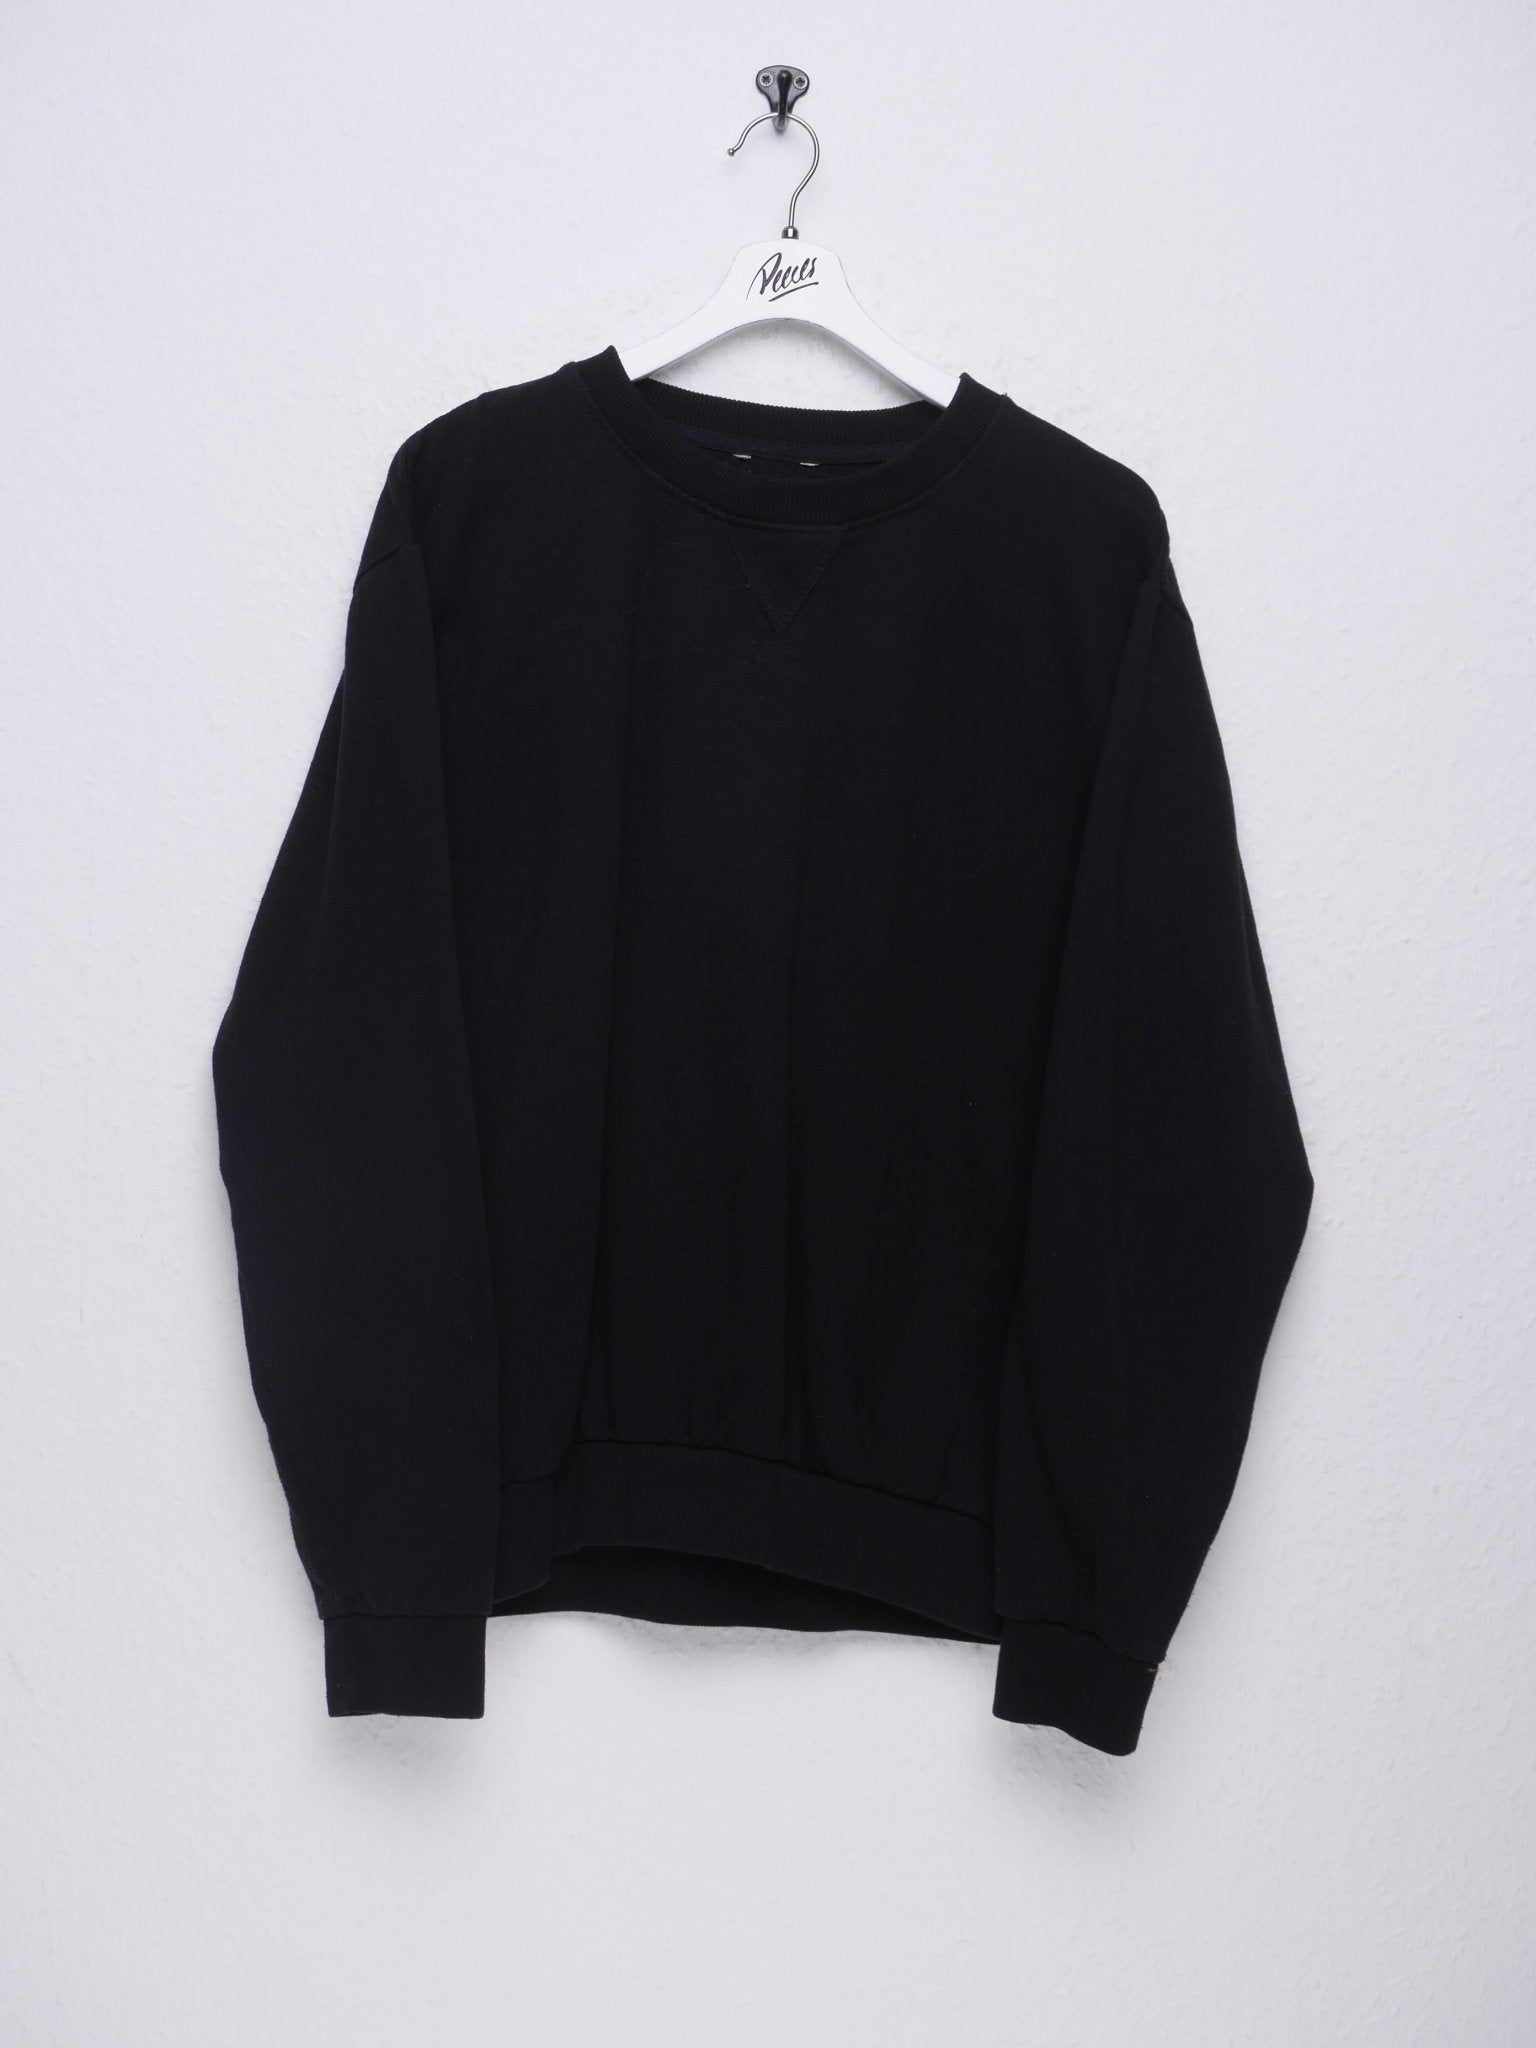 Plain Black Vintage Sweater - Peeces